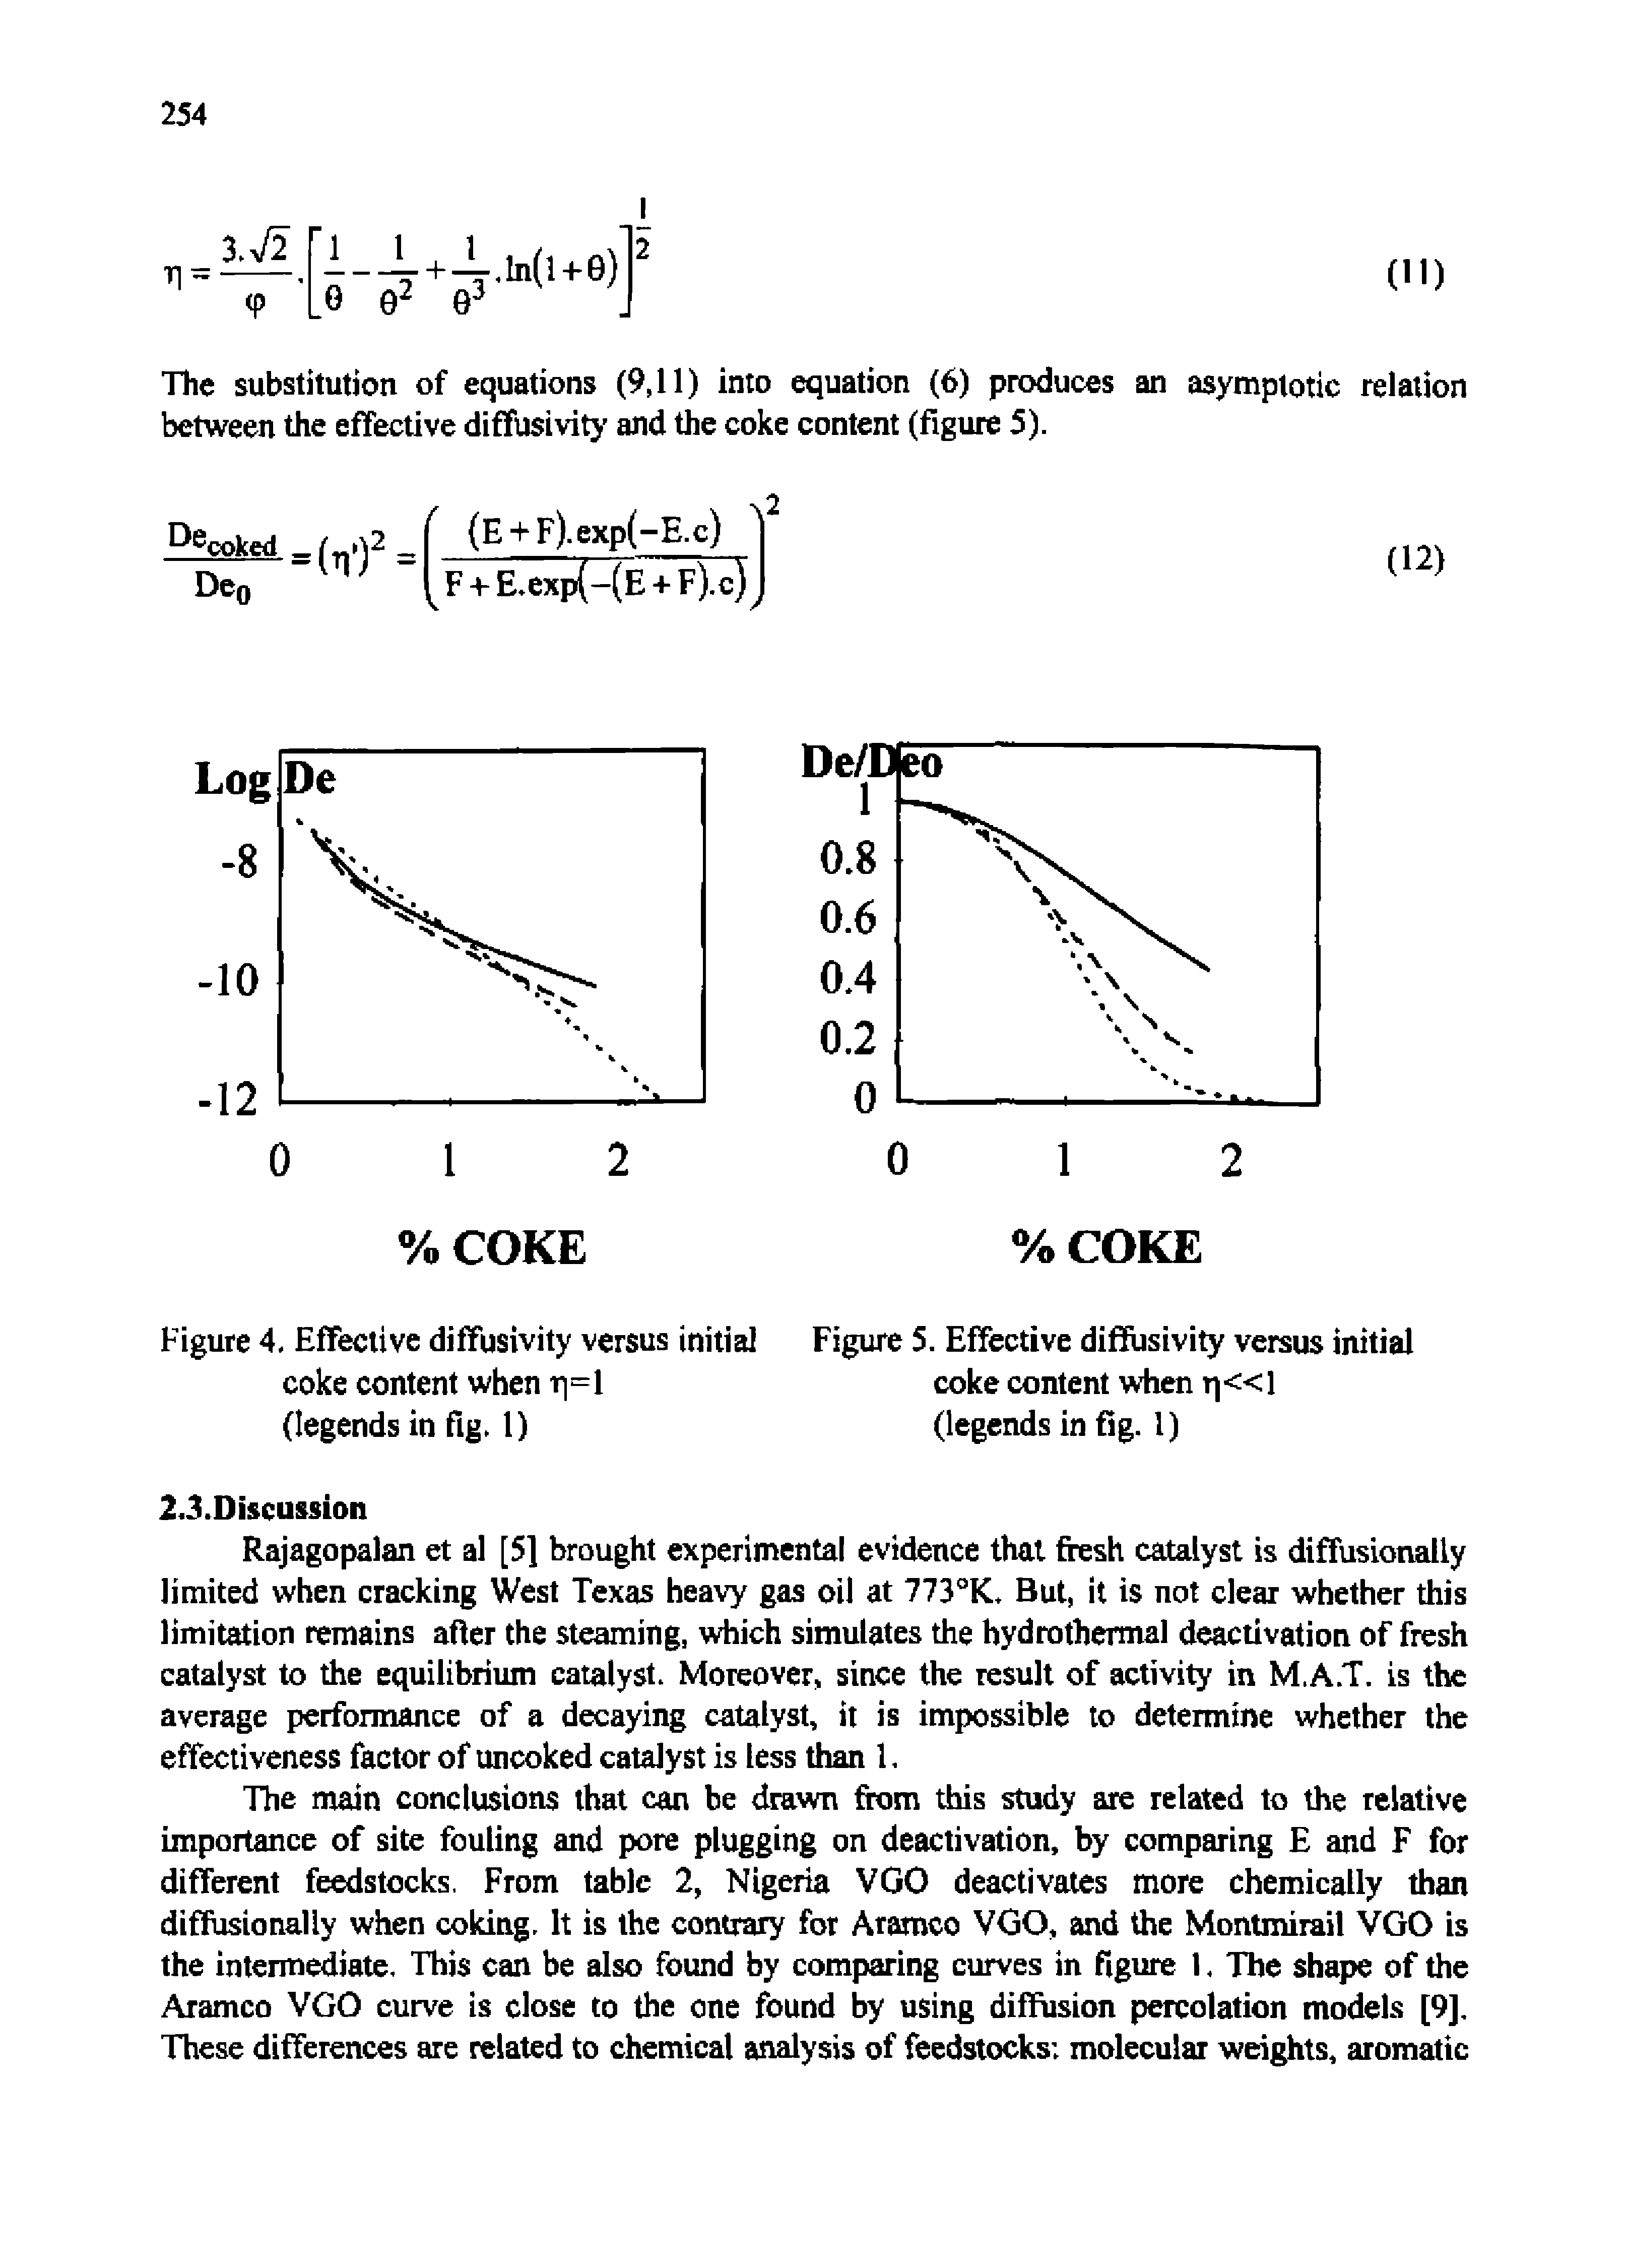 Figure 5. Effective diffusivity versus initial coke content when x ...